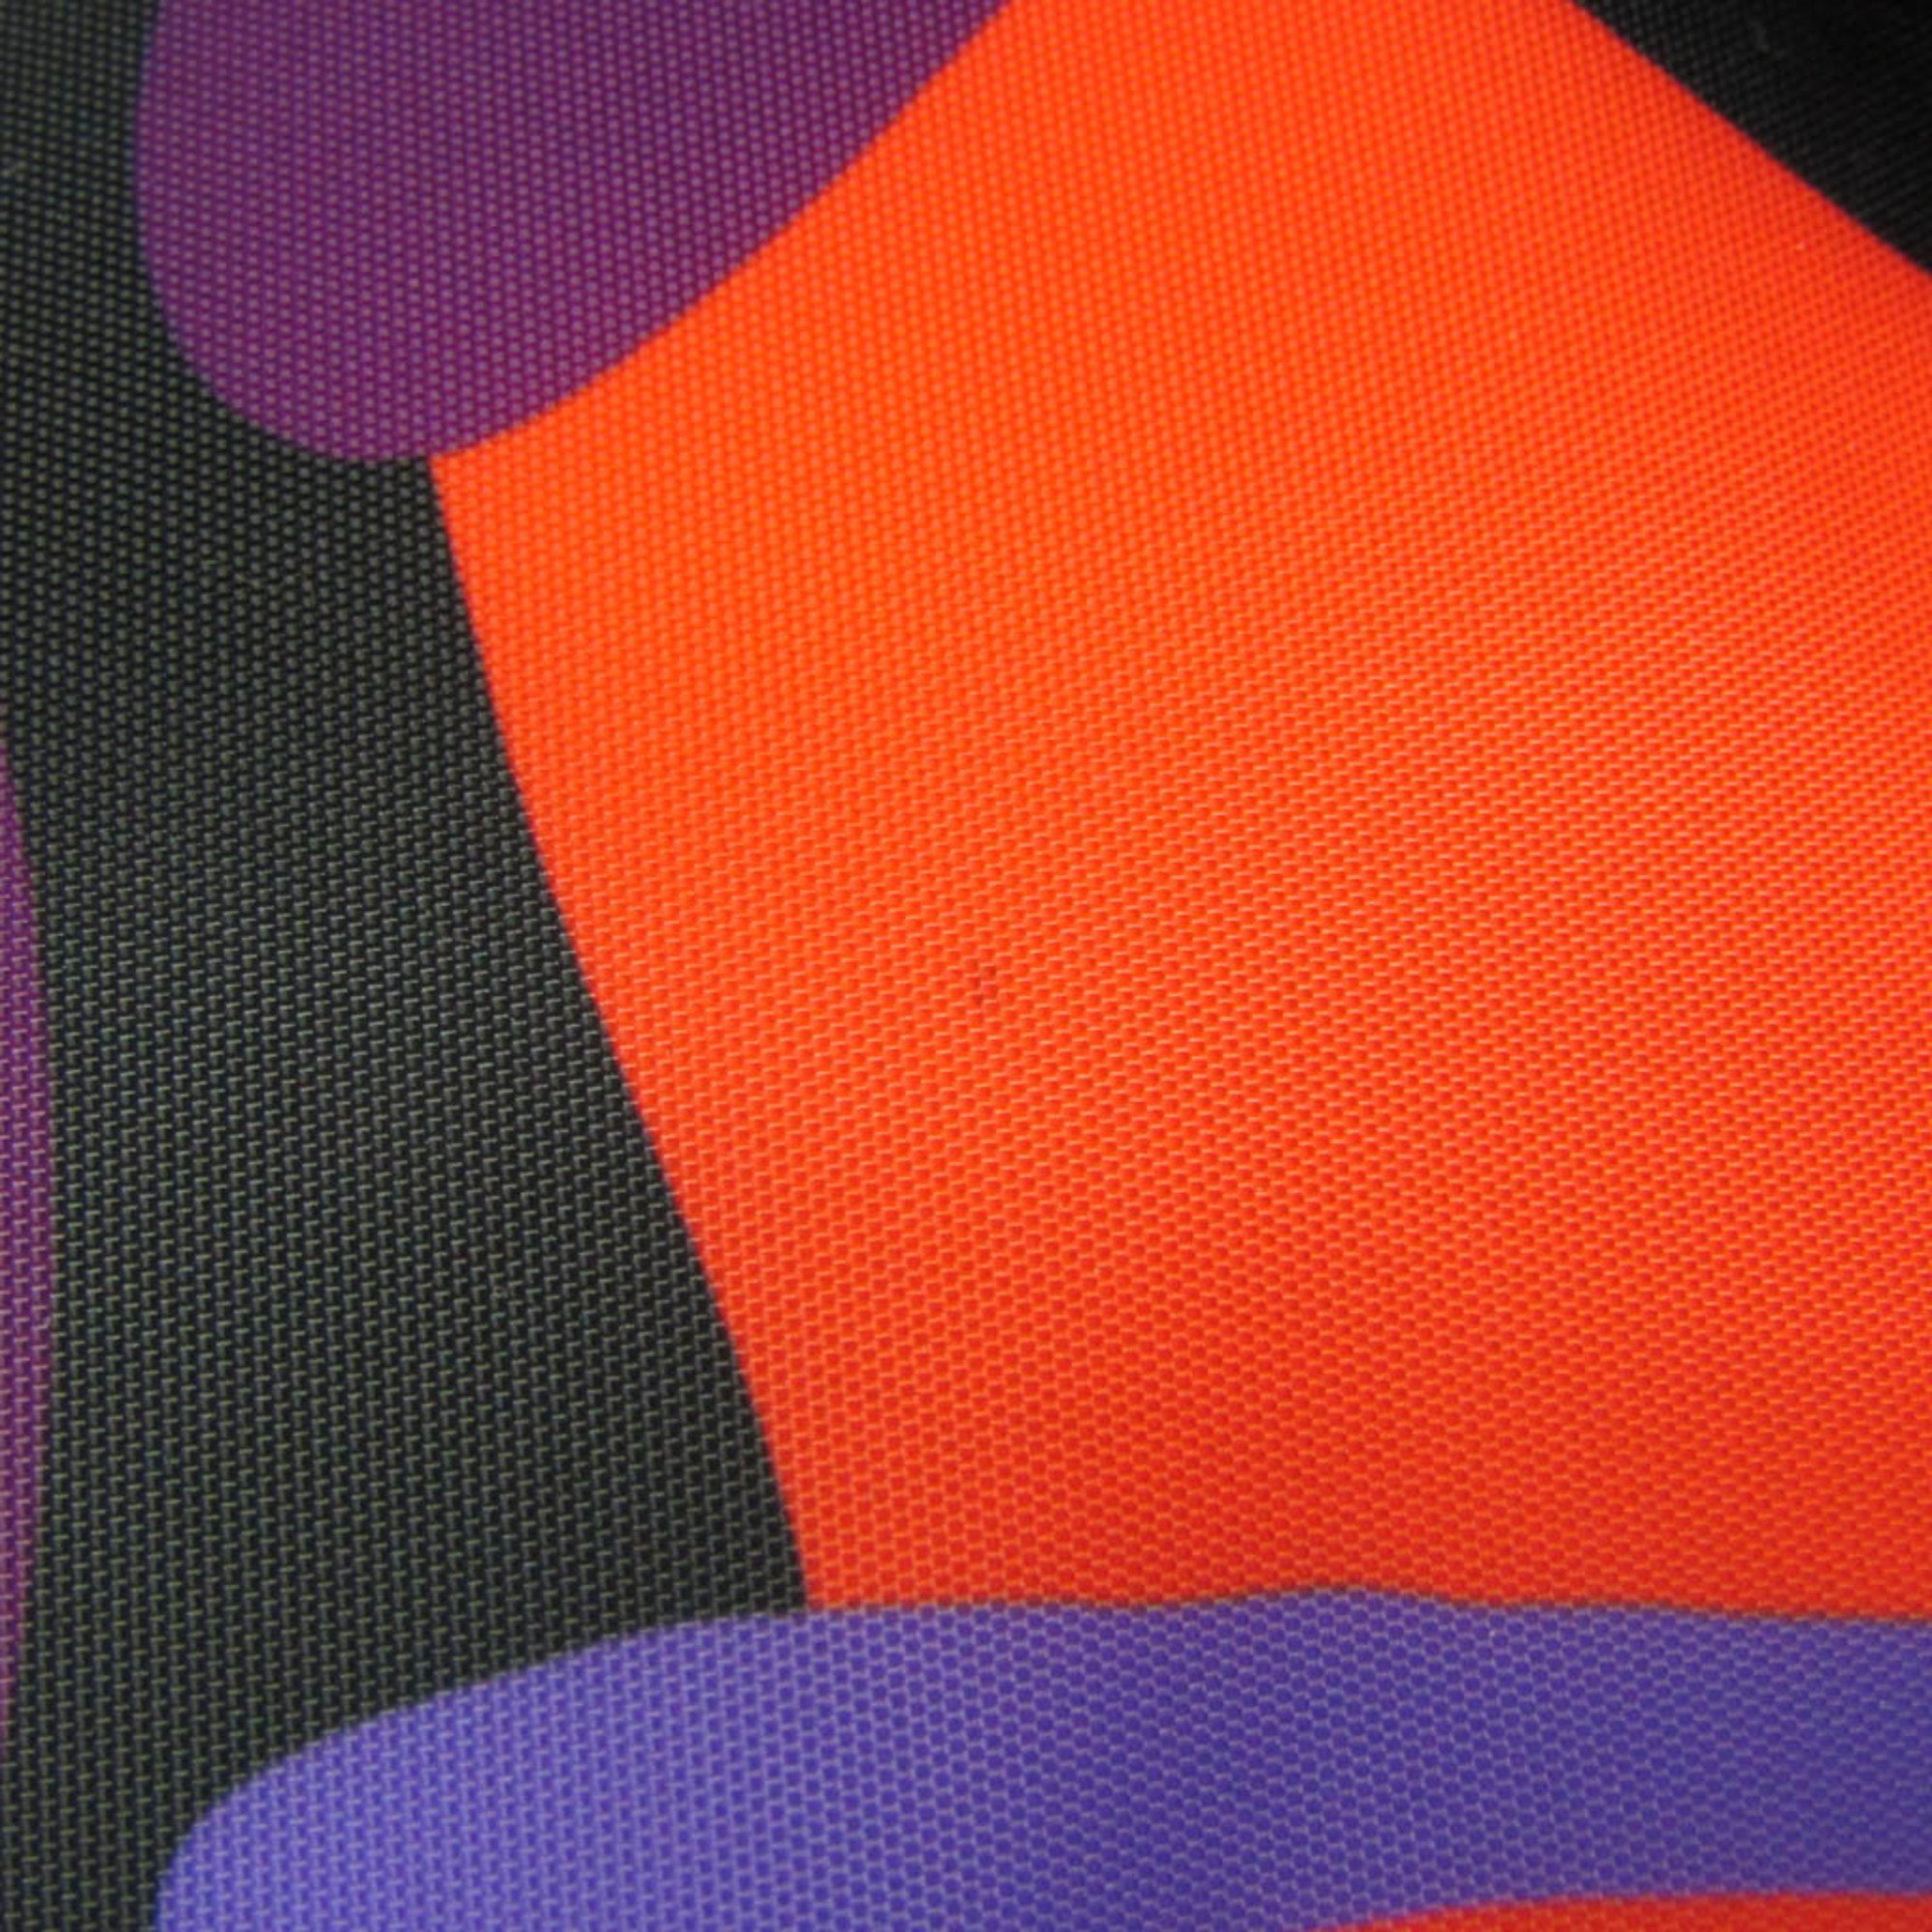 Vivienne Westwood VWH020 Men,Women Polyester,Leather Fanny Pack Multi-color,Navy,Purple